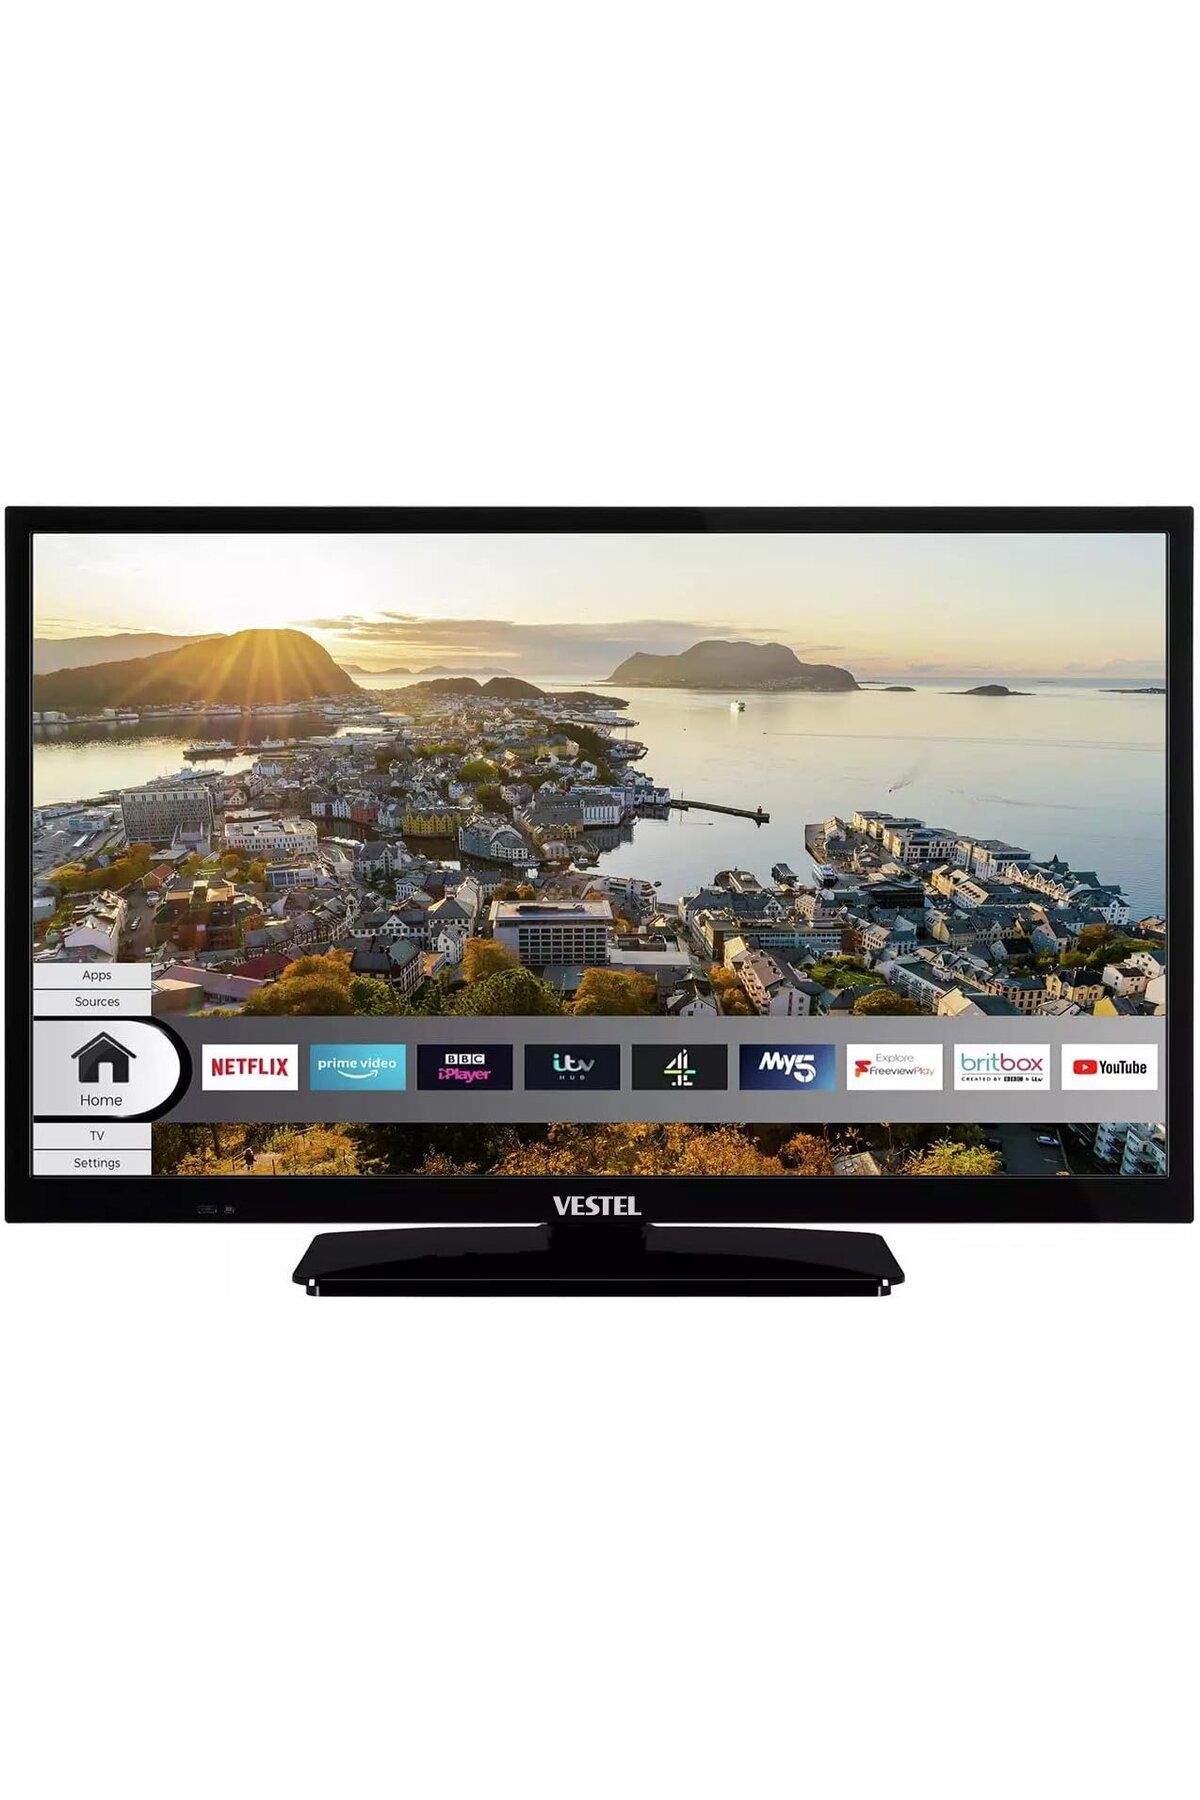 VESTEL 32" 82 Ekran Full Hd Smart LED TV (Uydusuz-Refurbished-2 Yıl Garanti)